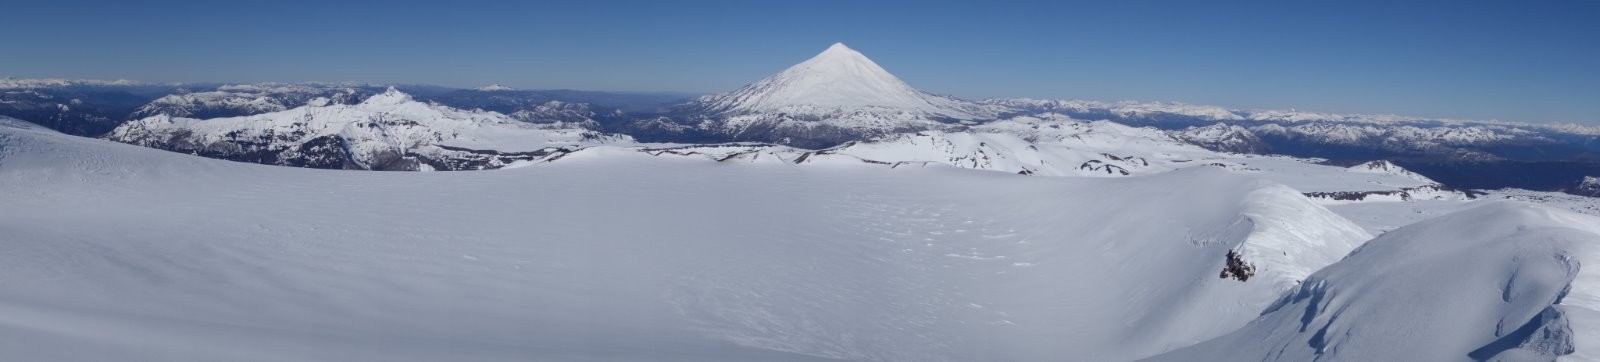 Panorama sur le volcan Lanin